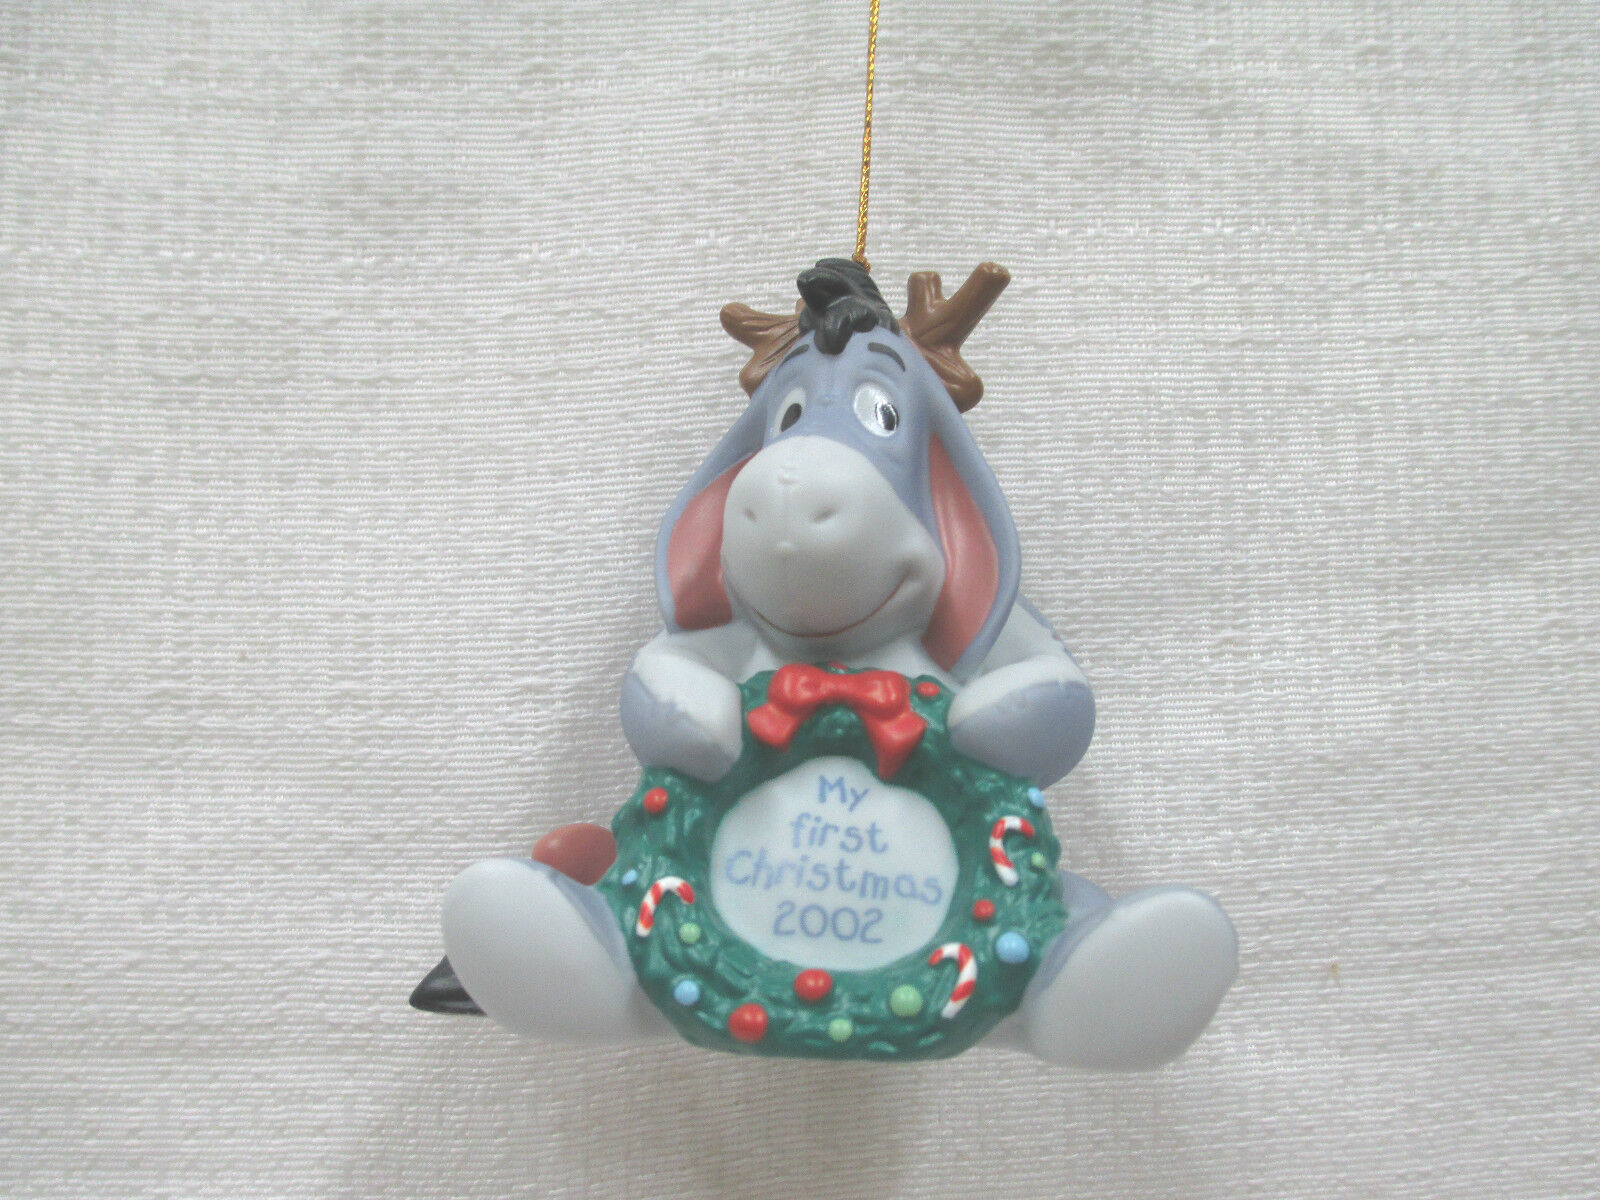 Walt Disney Winnie the Pooh and Friends My First Christmas 2002 Eeyore Ornament